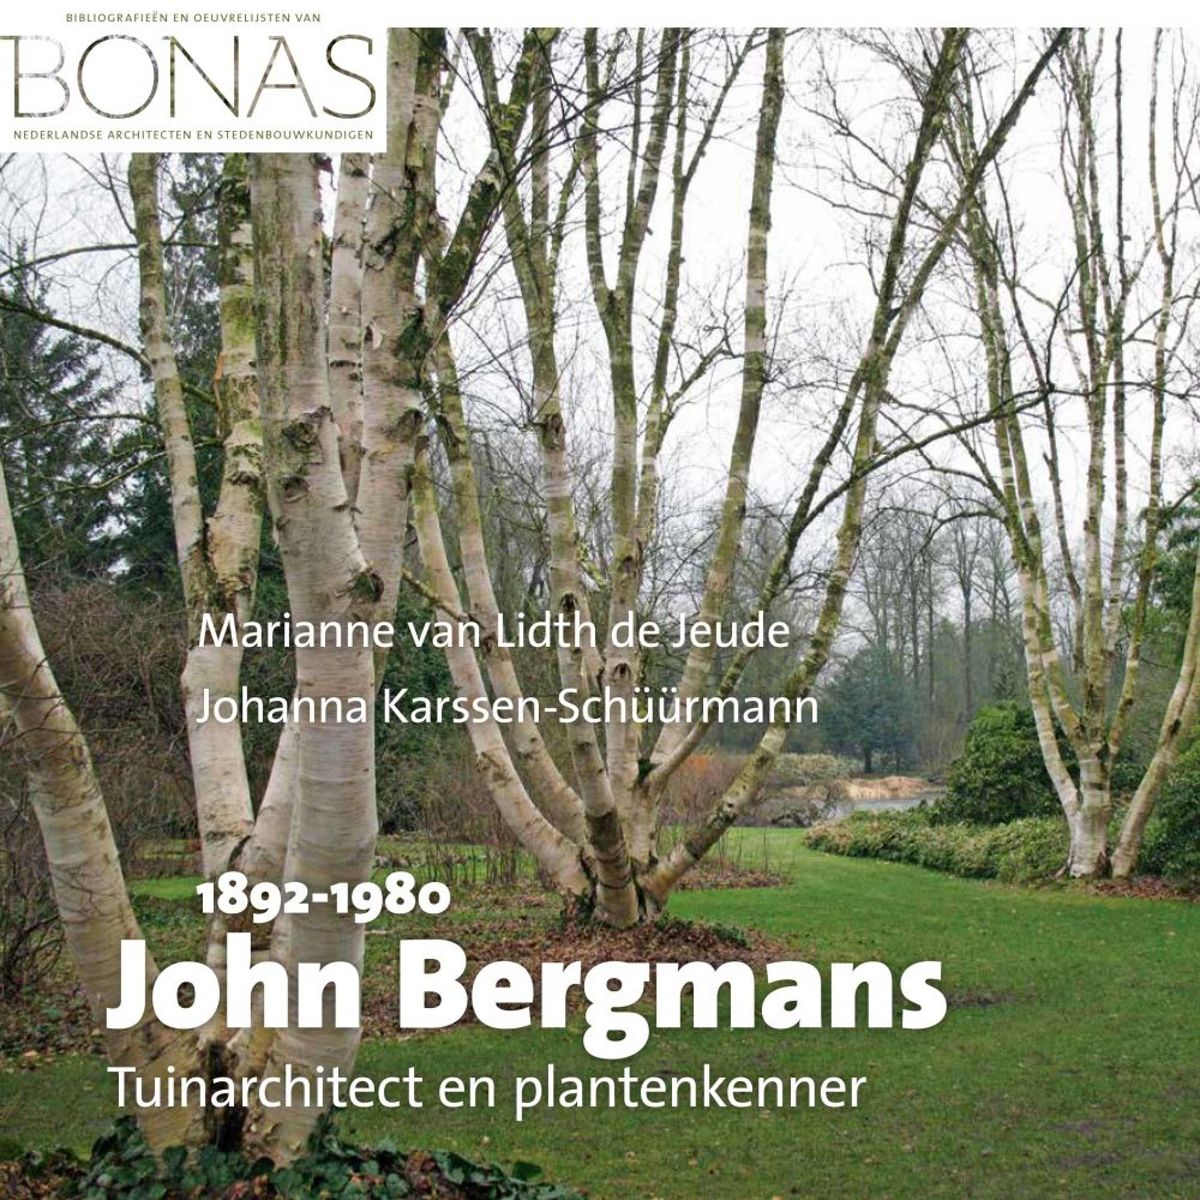 Book cover of John Bergmans, 1892-1980: tuinarchitect en plantenkenner. Hilversum: Bonas, 2018. 